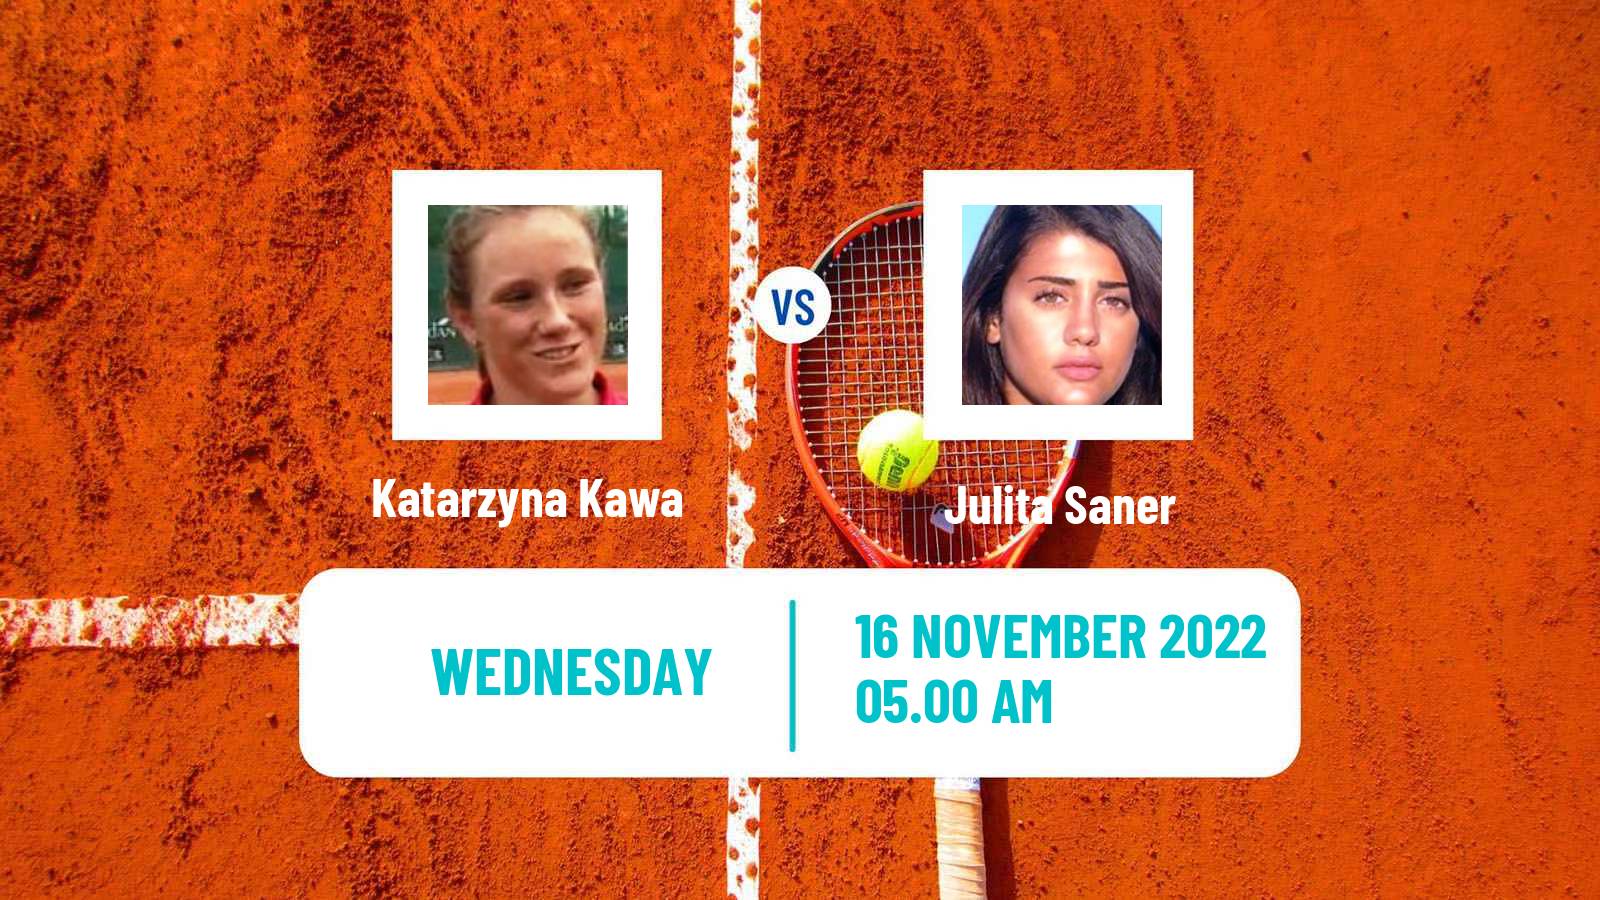 Tennis ITF Tournaments Katarzyna Kawa - Julita Saner